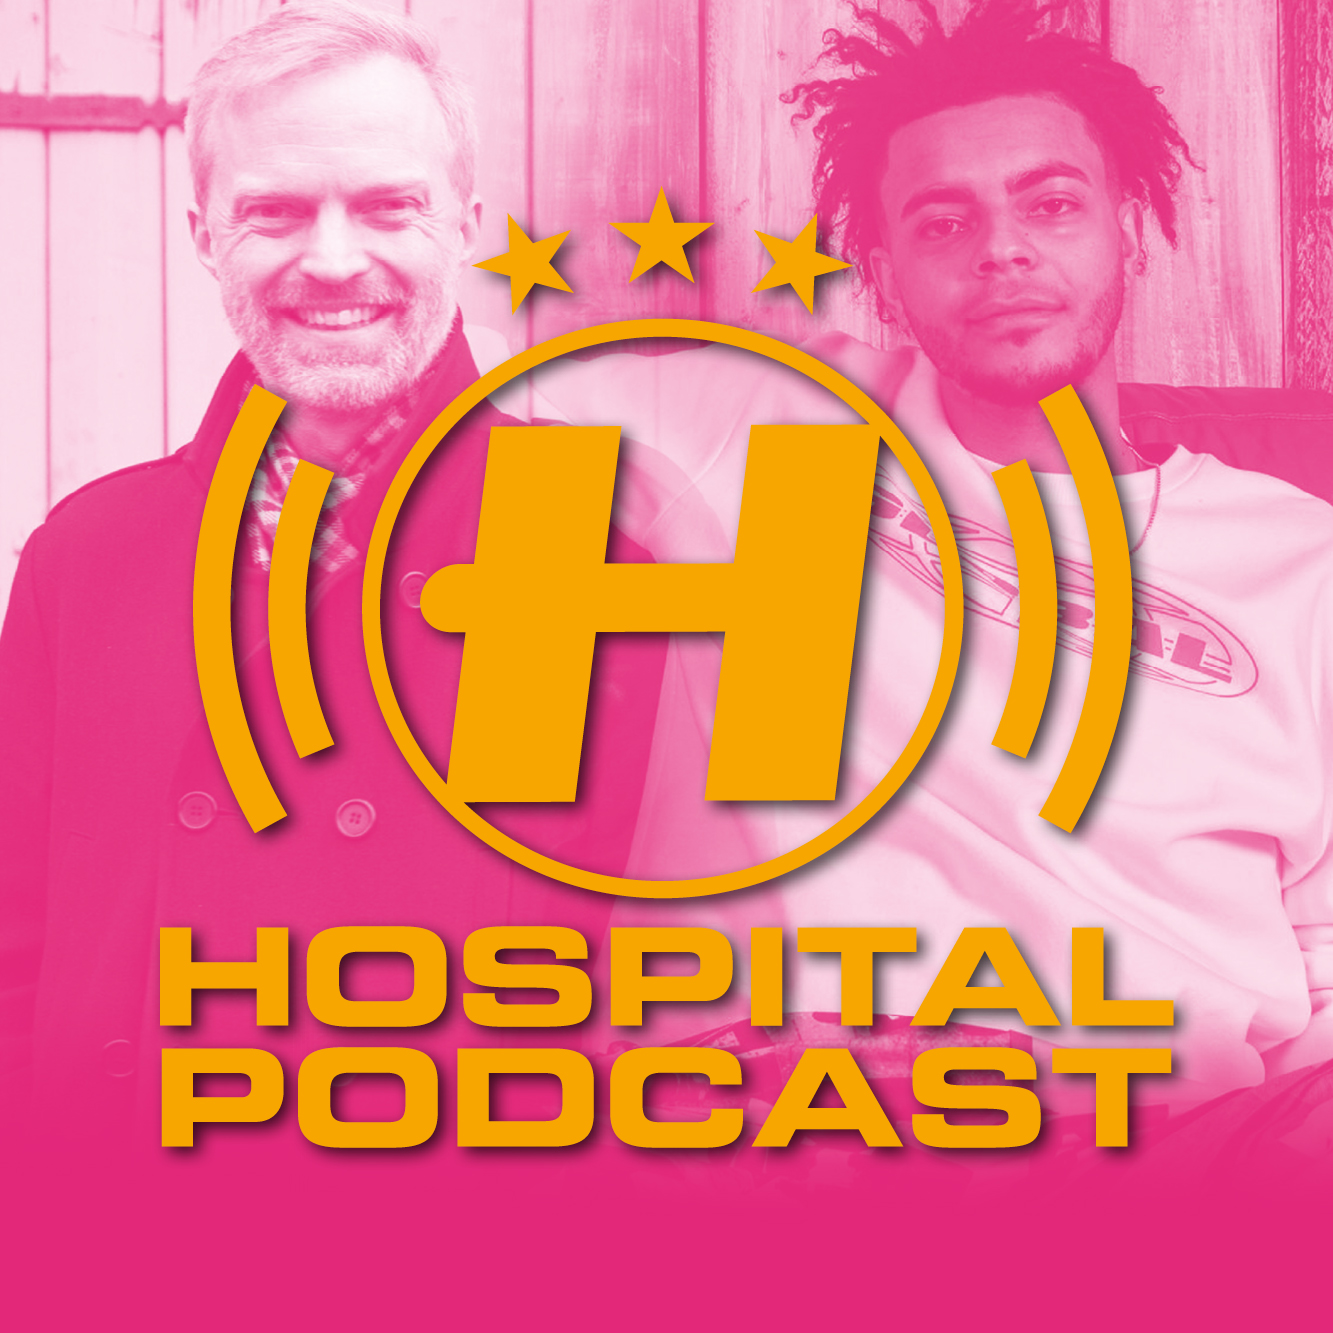 Hospital Podcast 453 with Chris Goss & Degs - Forza Horizon Special Artwork